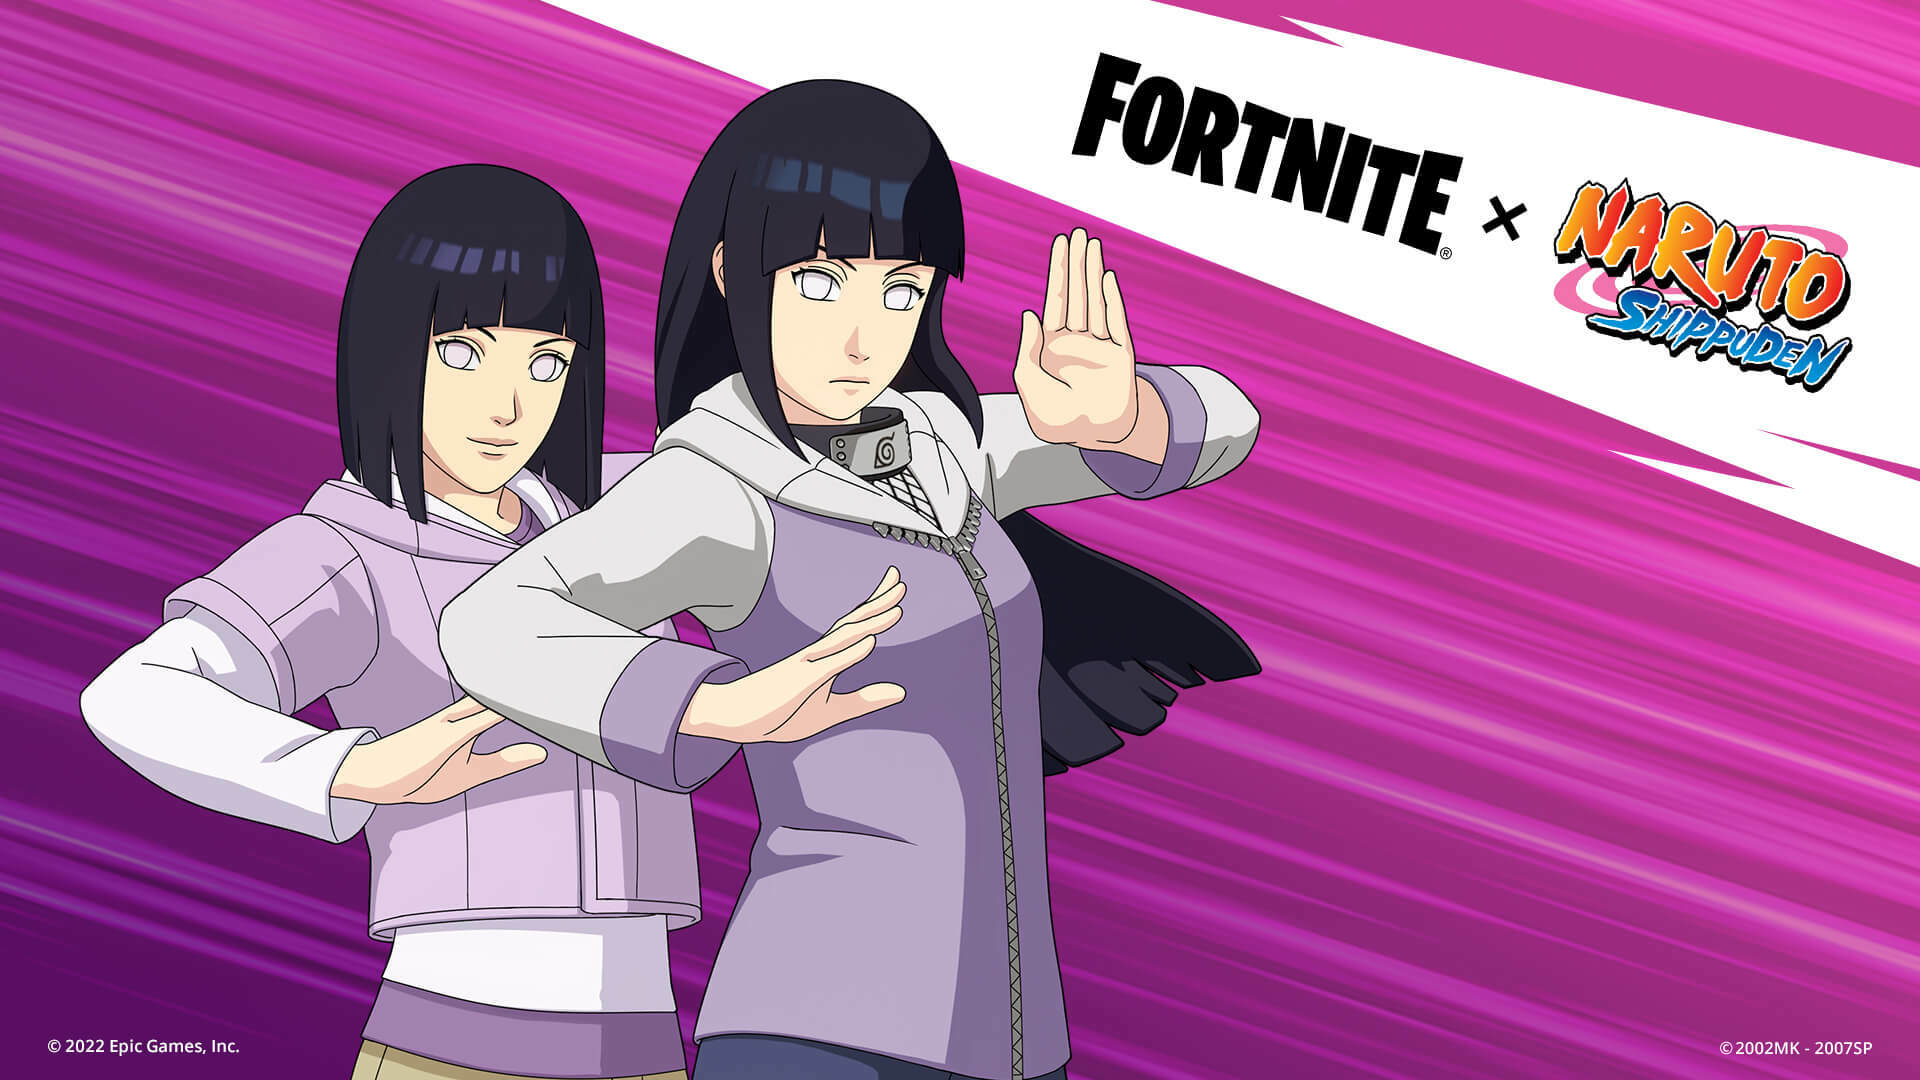 Fortnite Skillup Skins on Twitter Most used anime skins Naruto amp DBZ  only FortniteChapter4 FortniteFracture Fortnite  httpstcoEuLLBohL6N  X